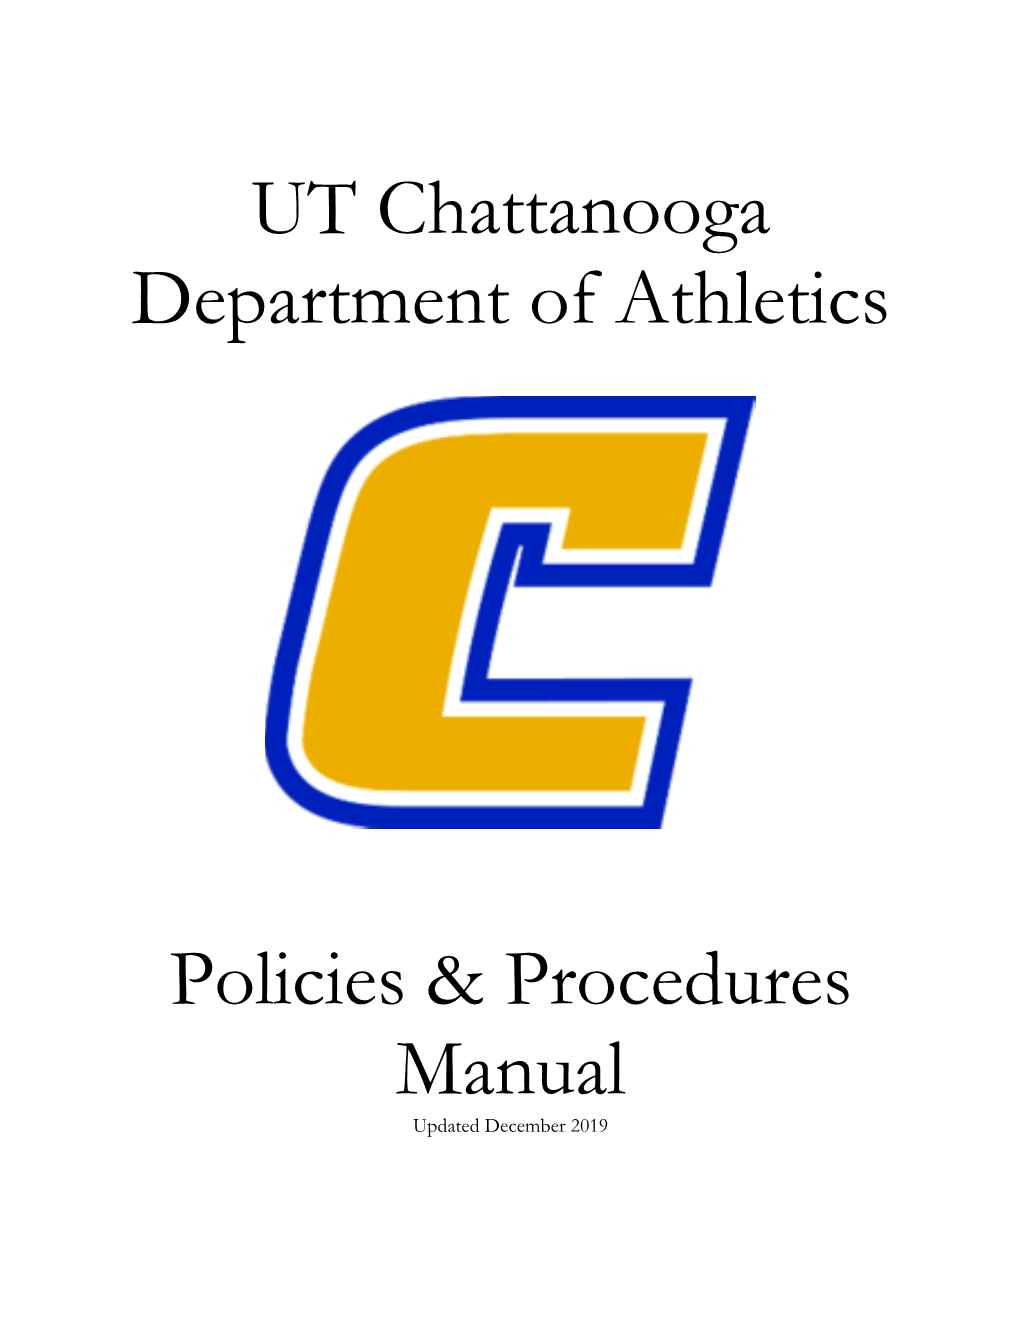 UT Chattanooga Department of Athletics Policies & Procedures